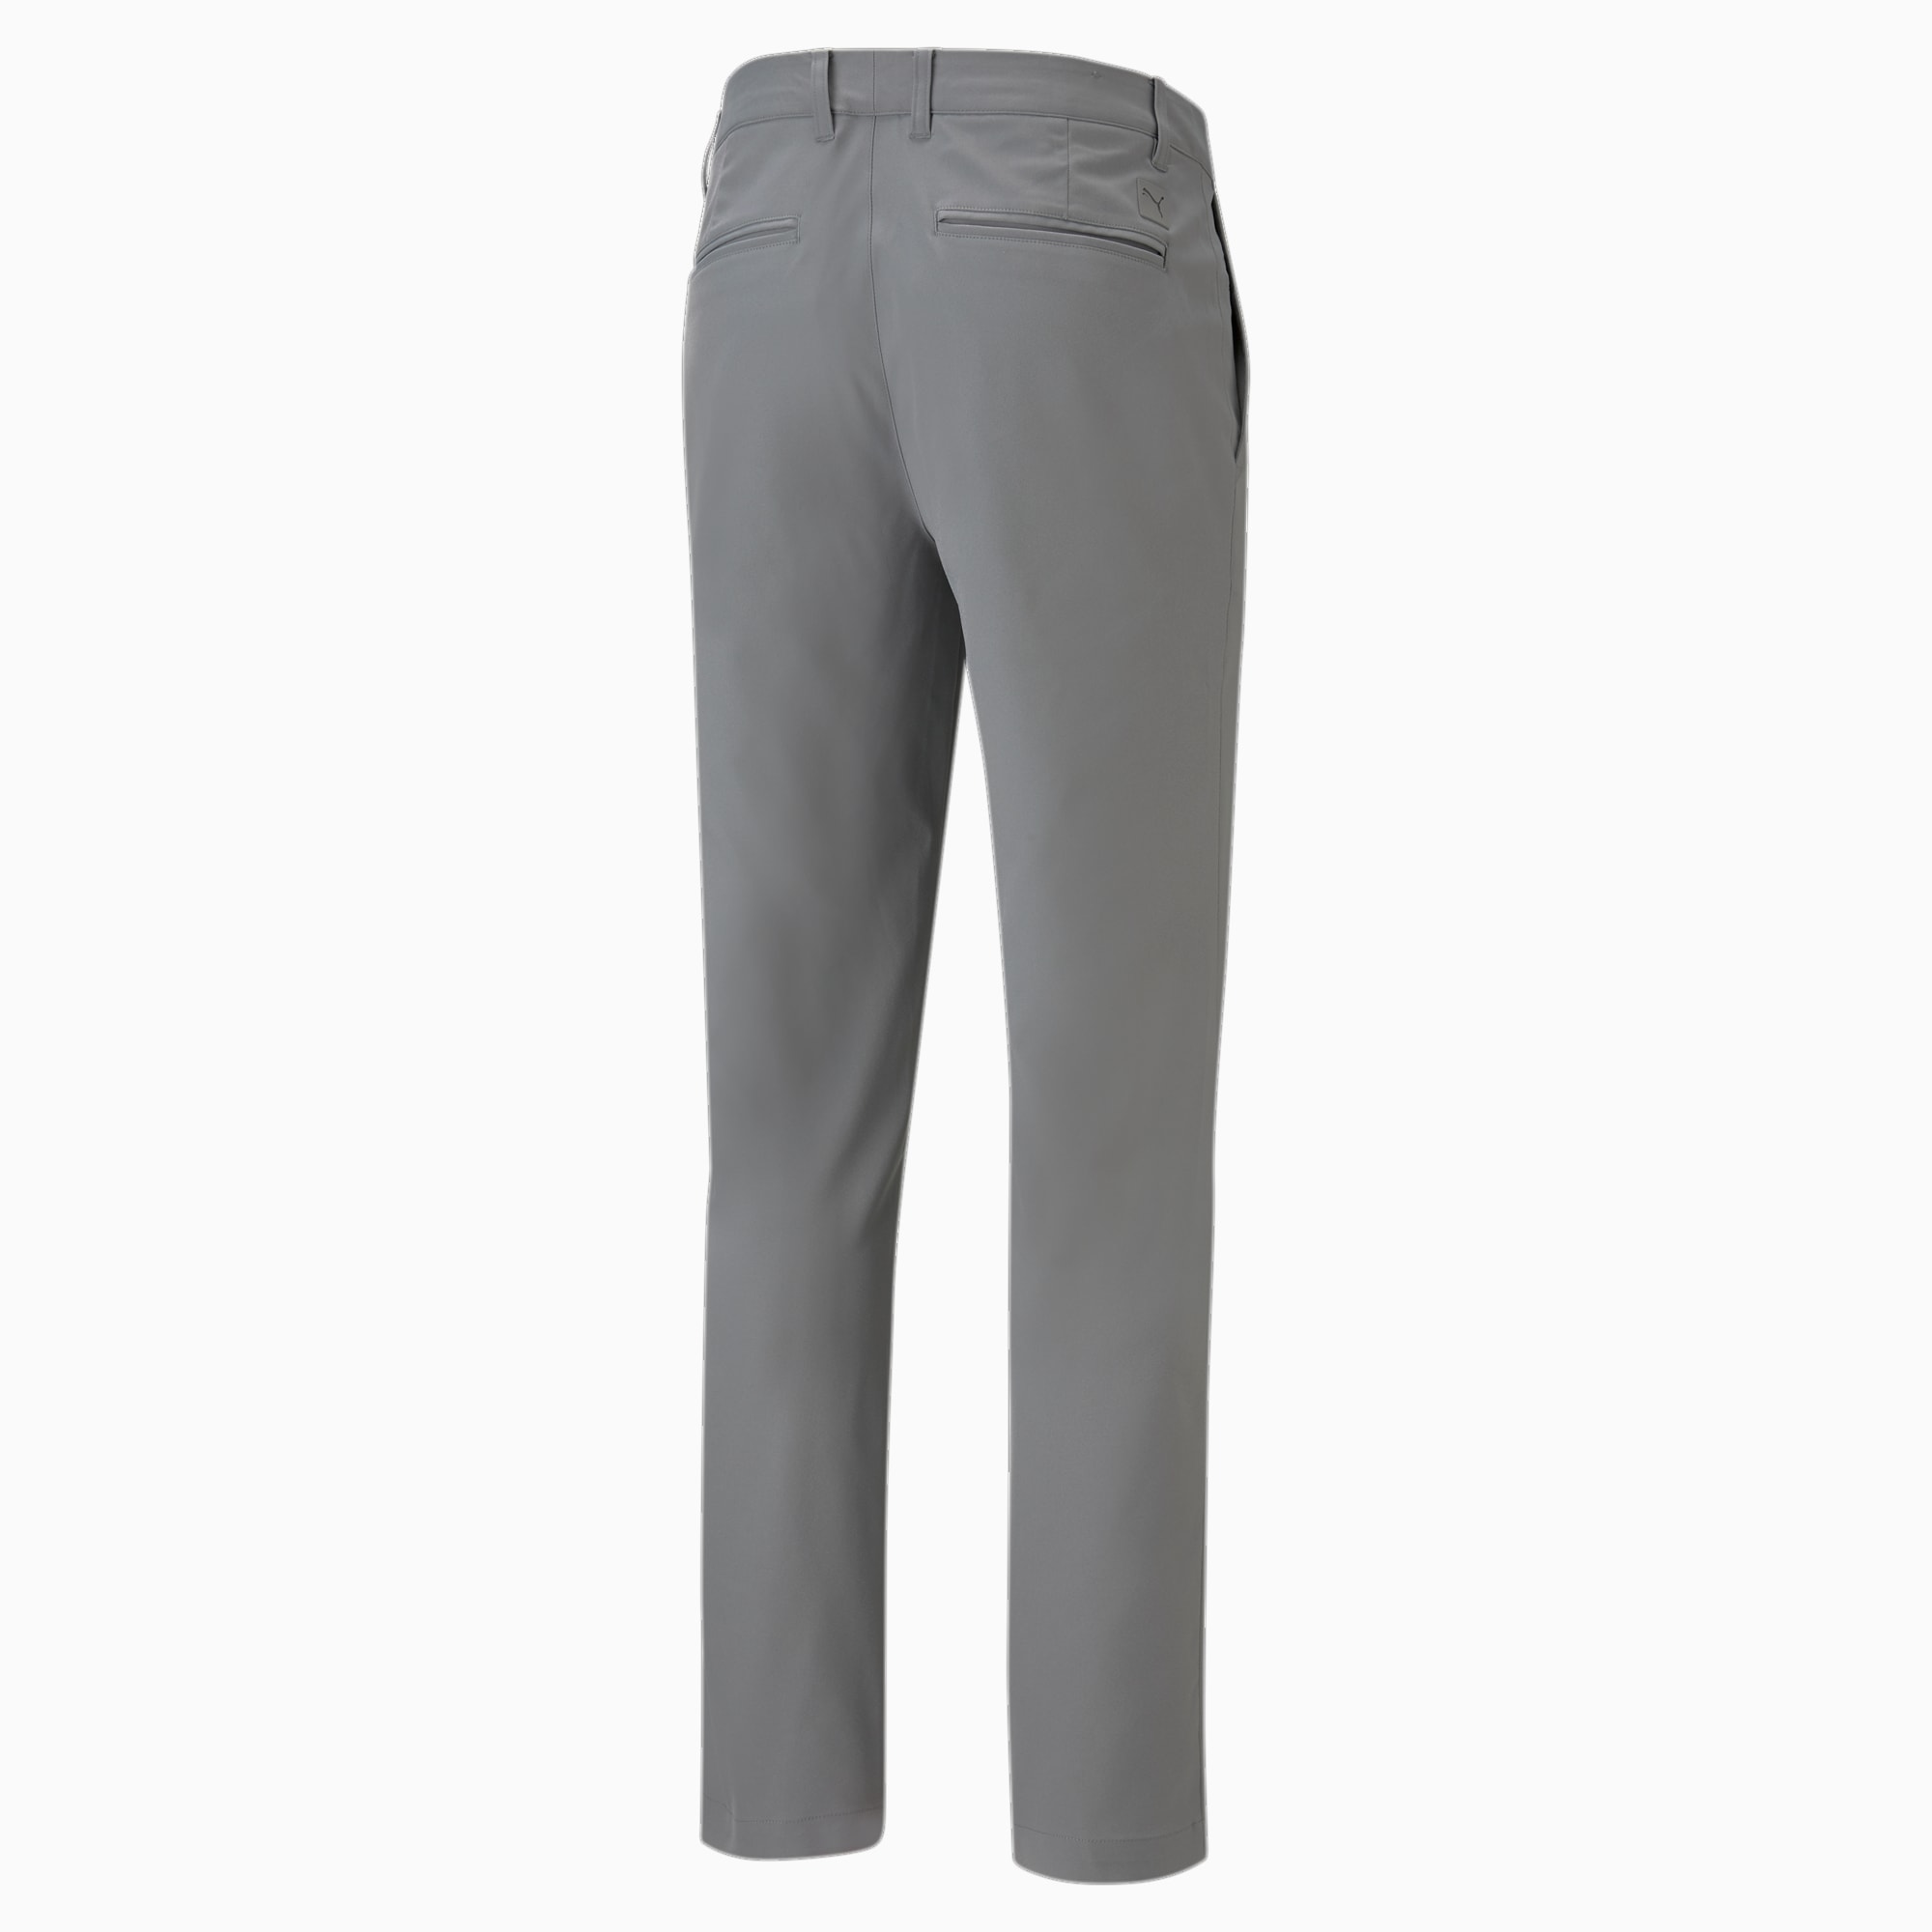 PUMA Dealer Tailored Golf Pants Men, Slate Sky, Size 35/34, Clothing